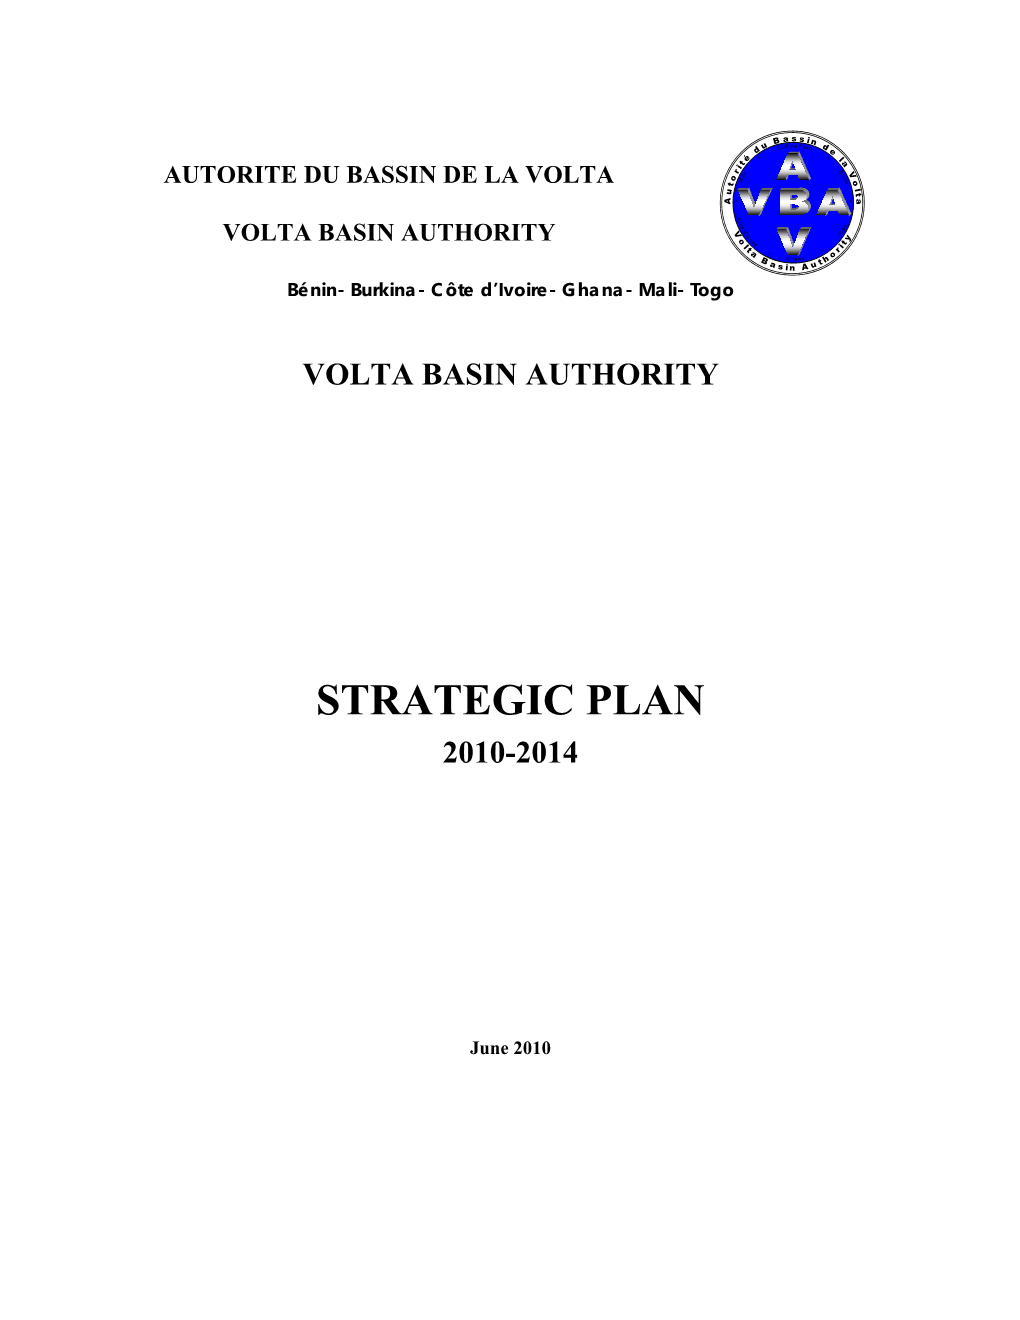 Strategic Plan 2010-2014